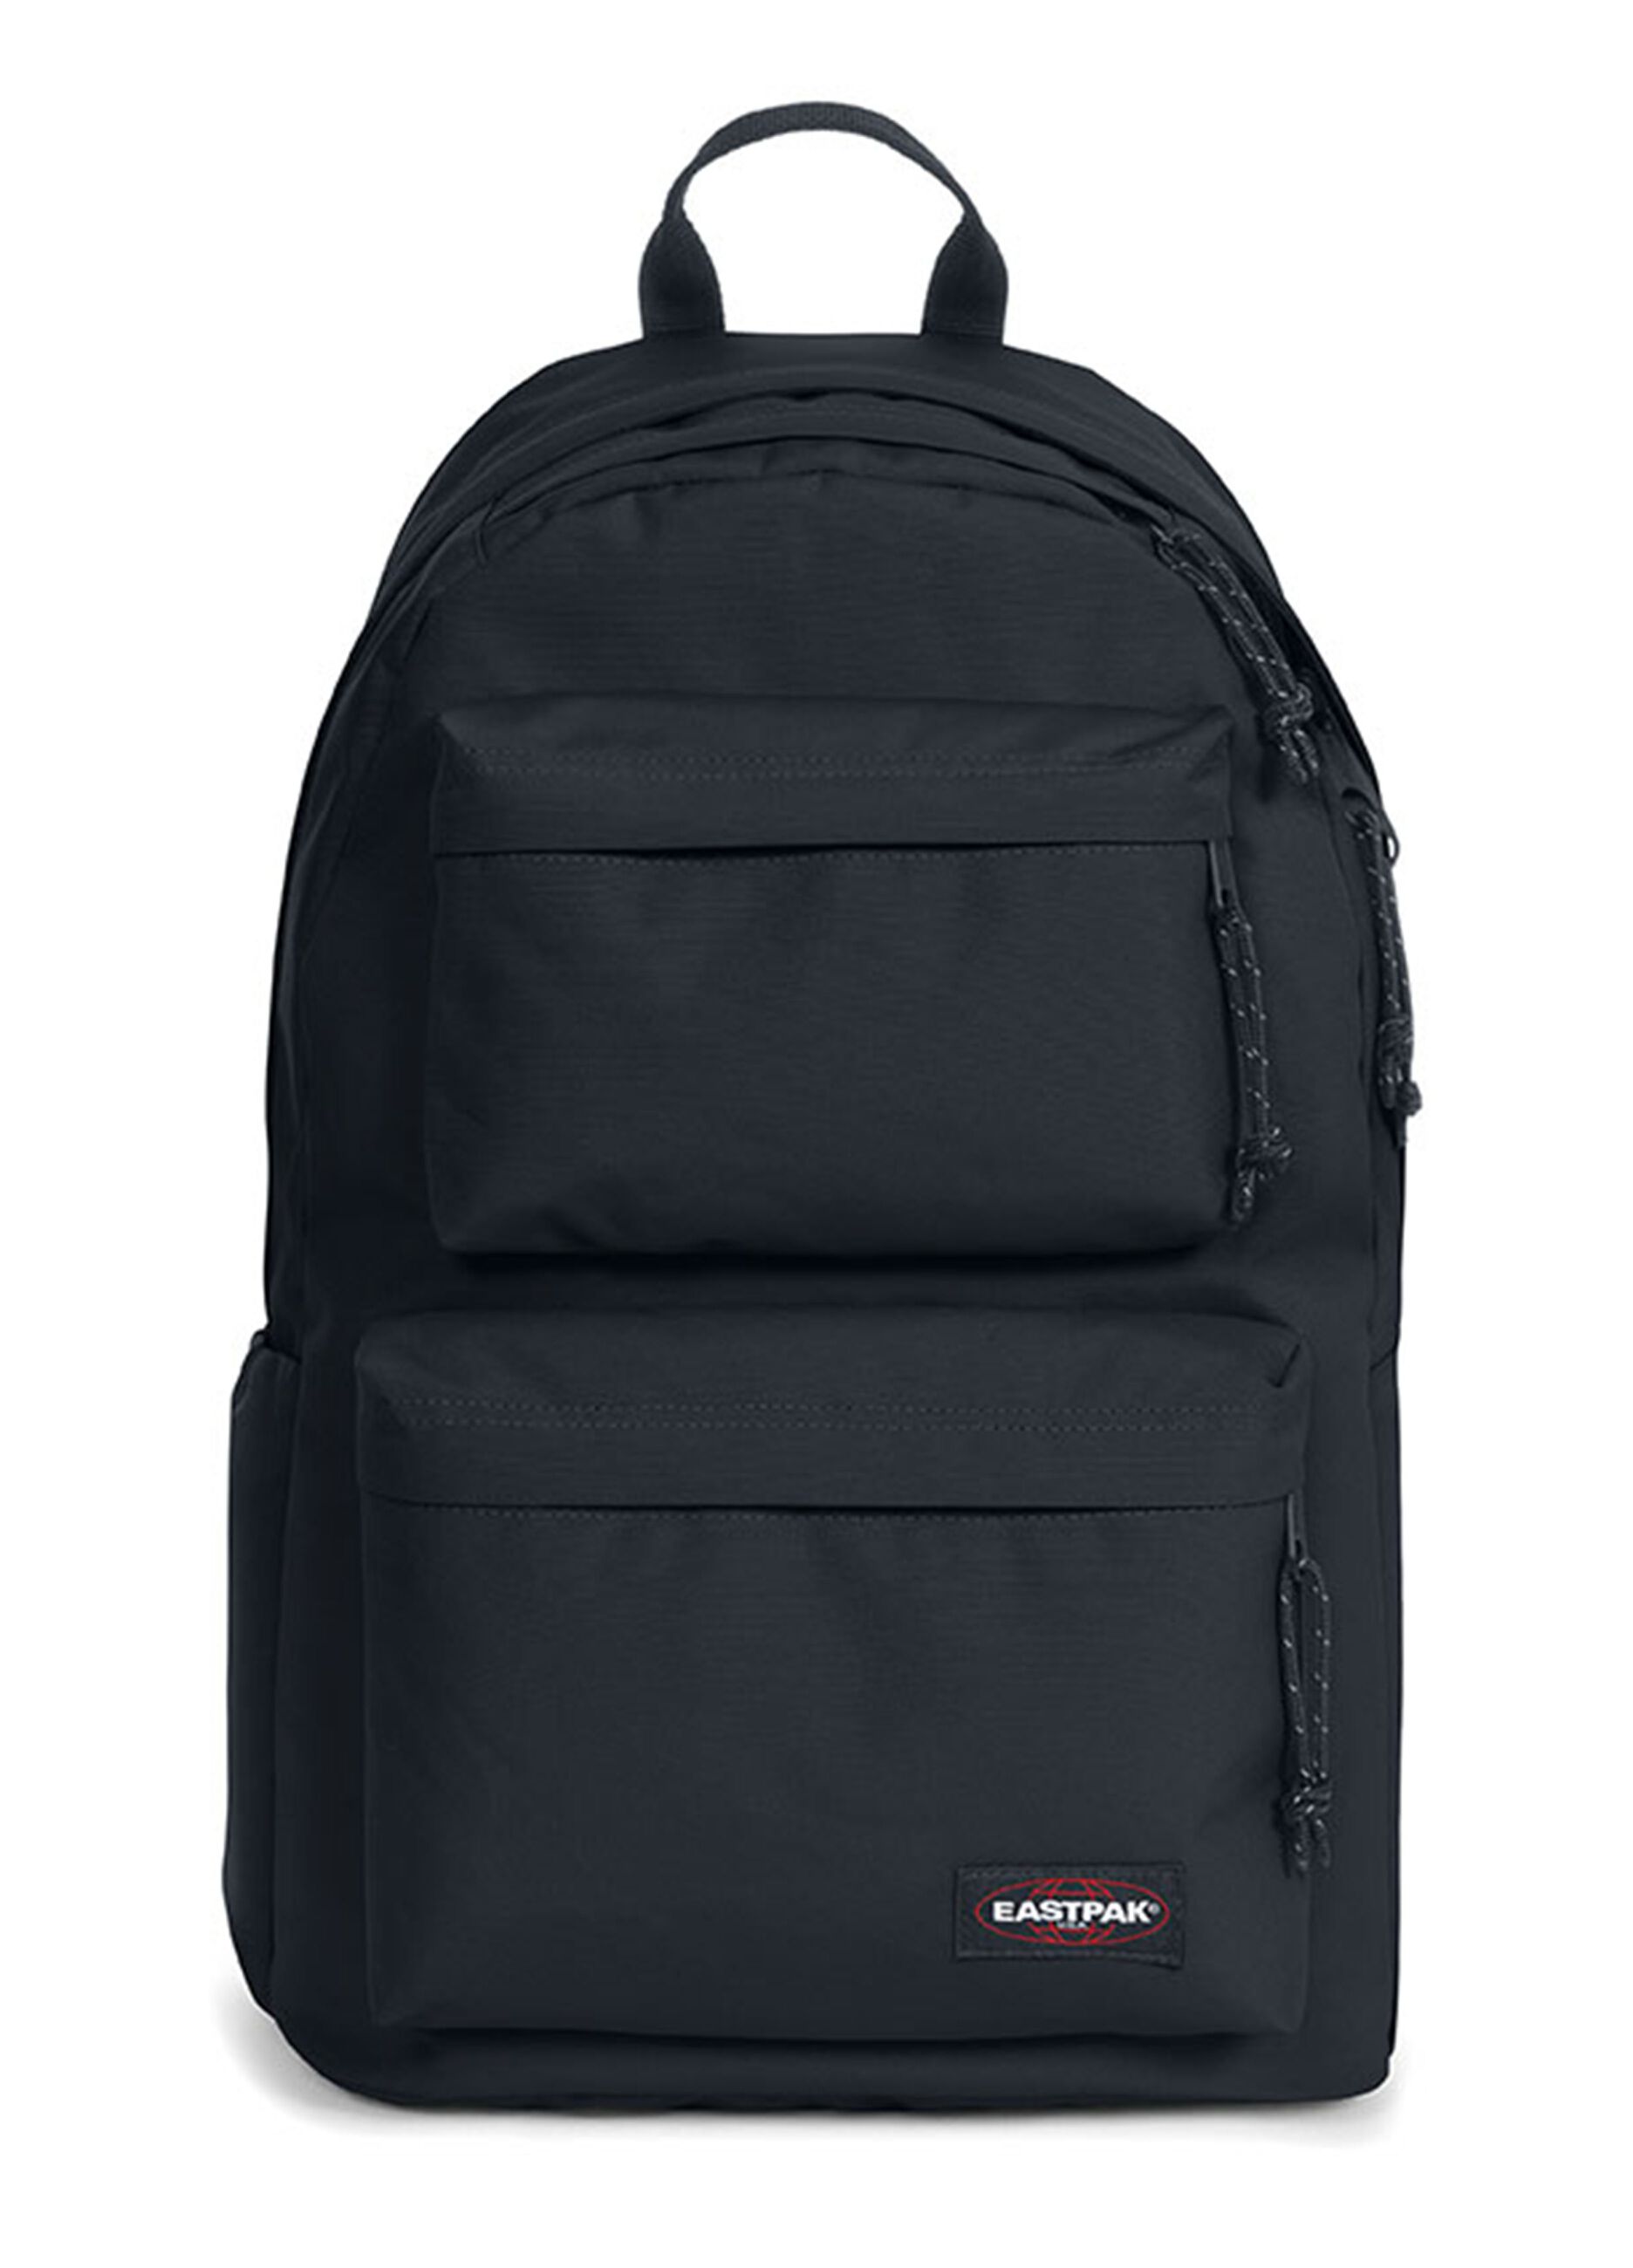 Eastpak Padded Double backpack